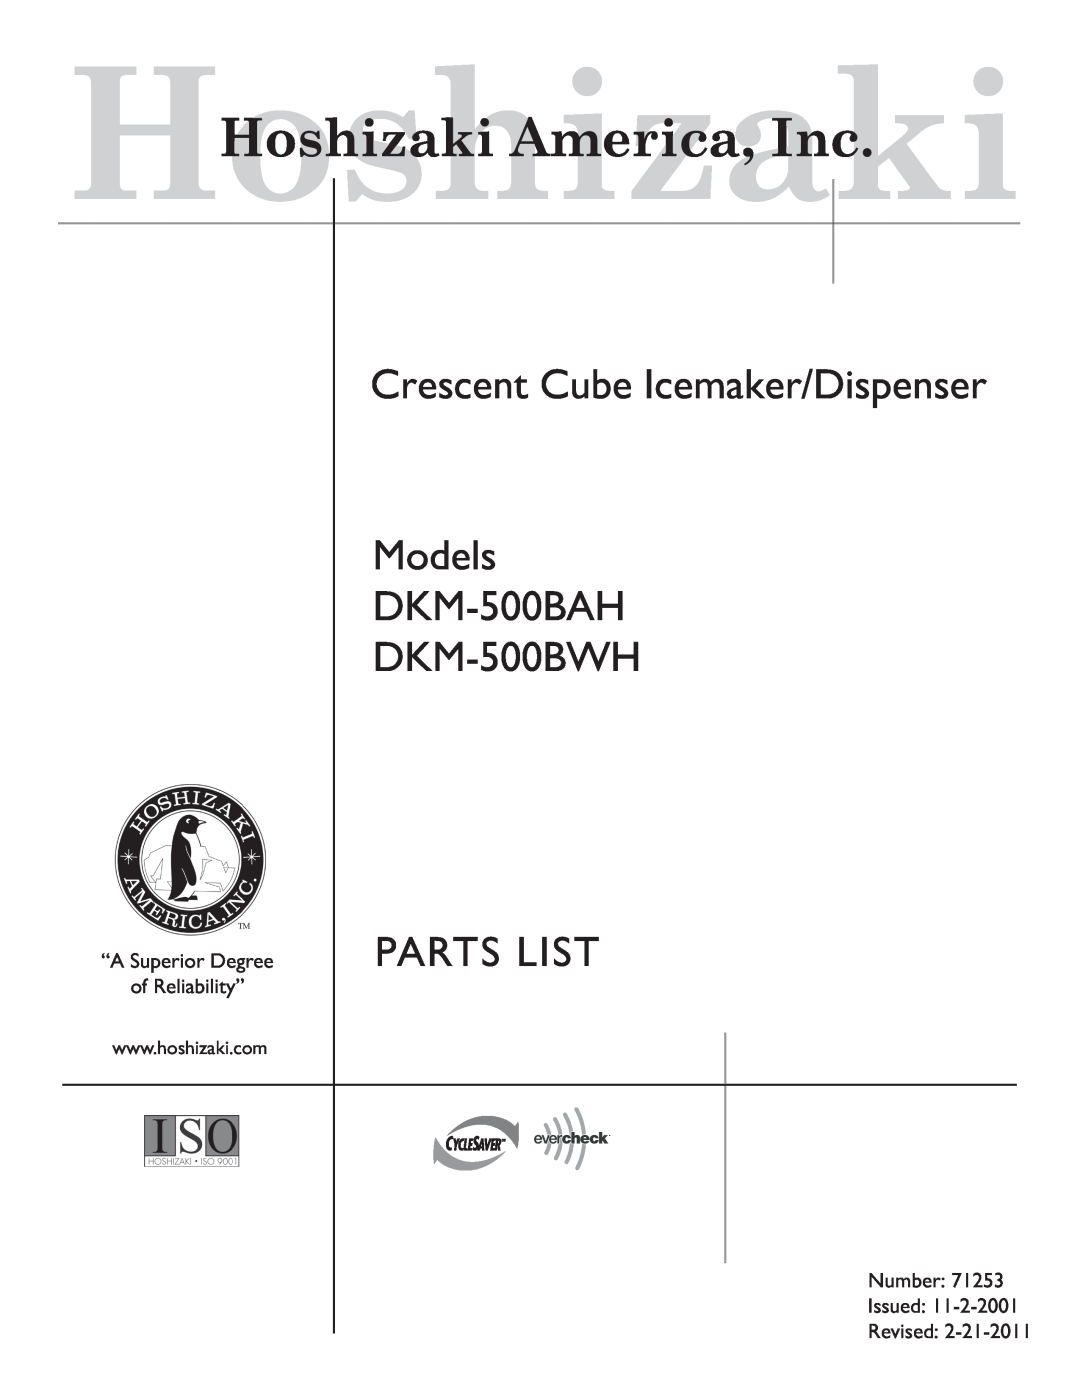 Hoshizaki manual Crescent Cube Icemaker/Dispenser Models, DKM-500BAH DKM-500BWH, Parts List, Number Issued Revised 